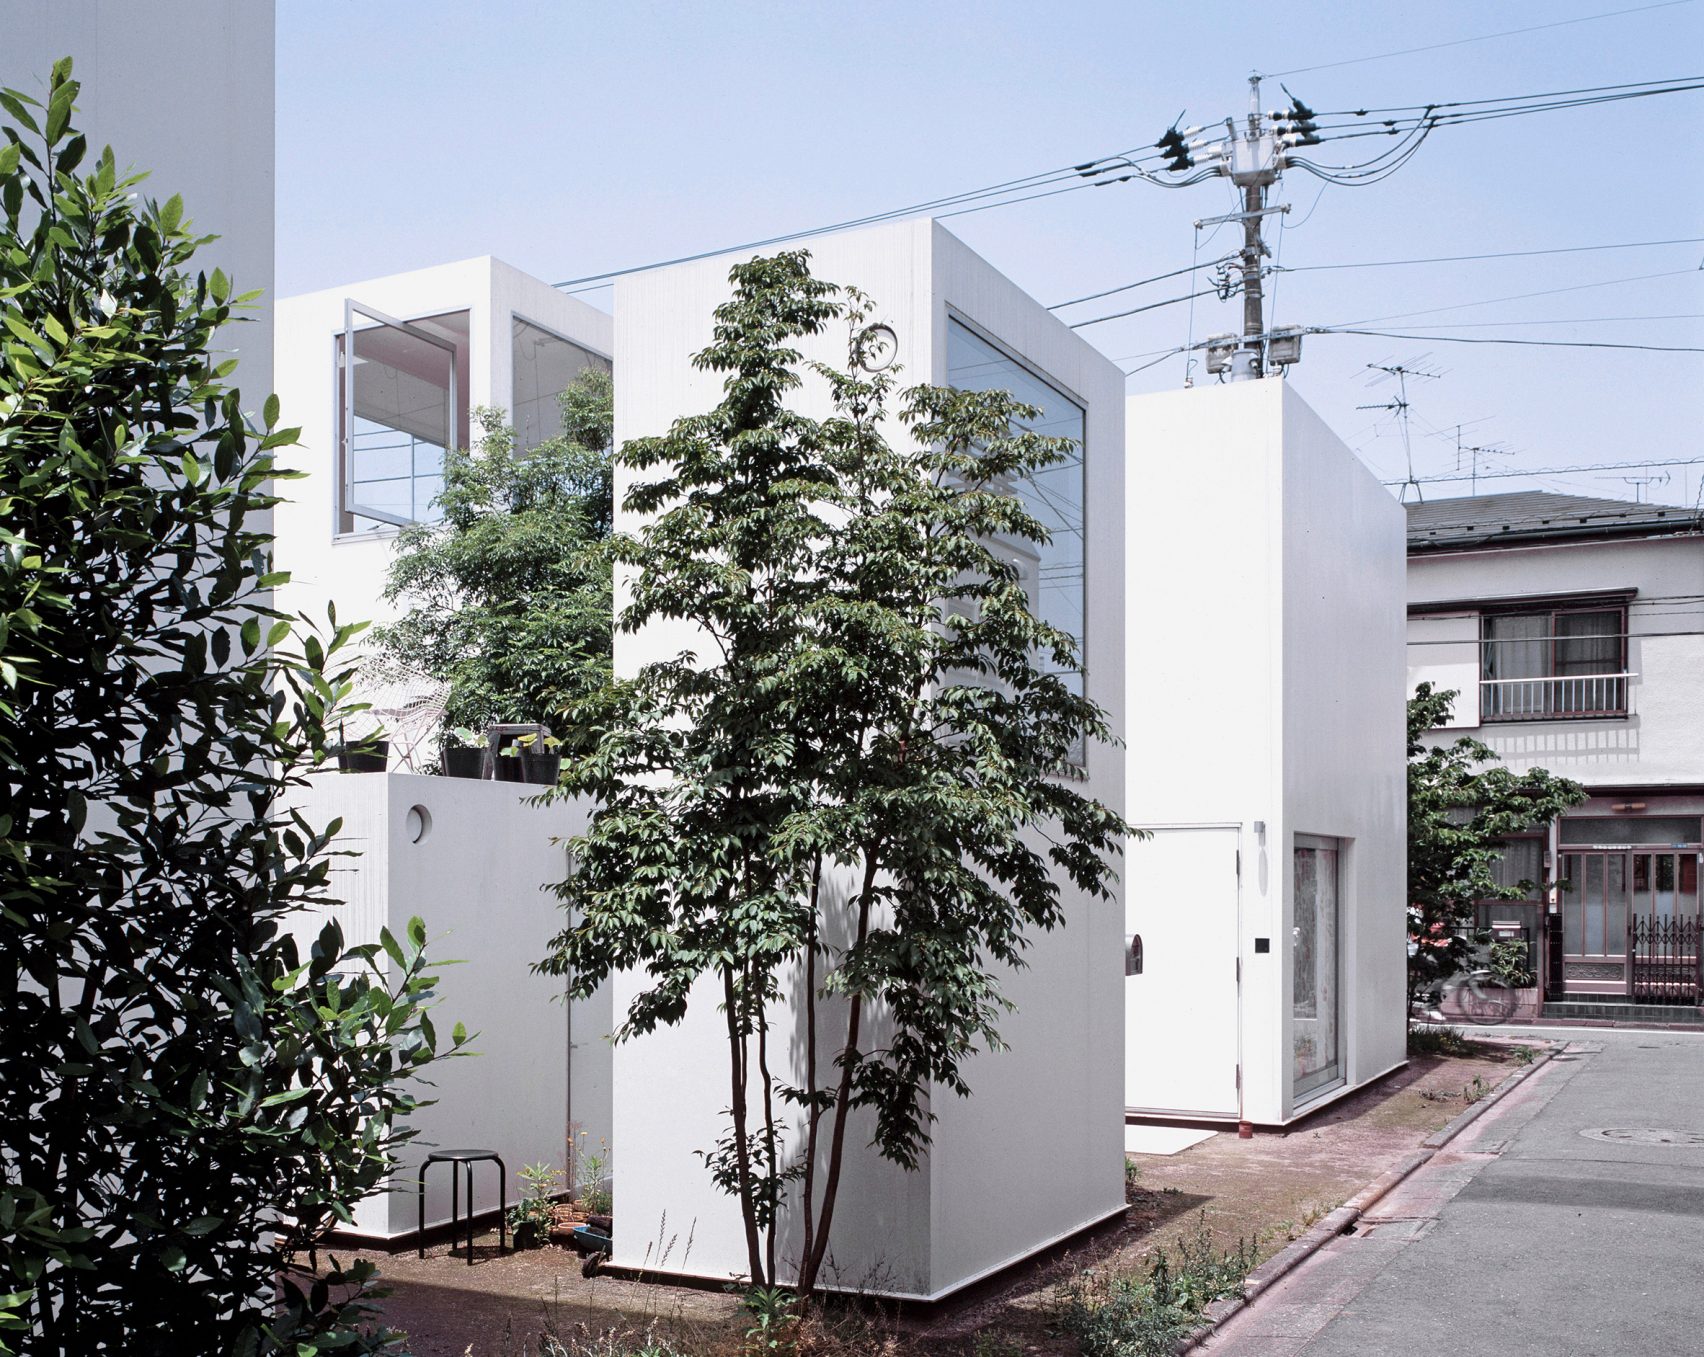 moriyama-house-photos-edmund-sumner-architecture-photography-residential-japan_dezeen_2364_col_1-1704x1357